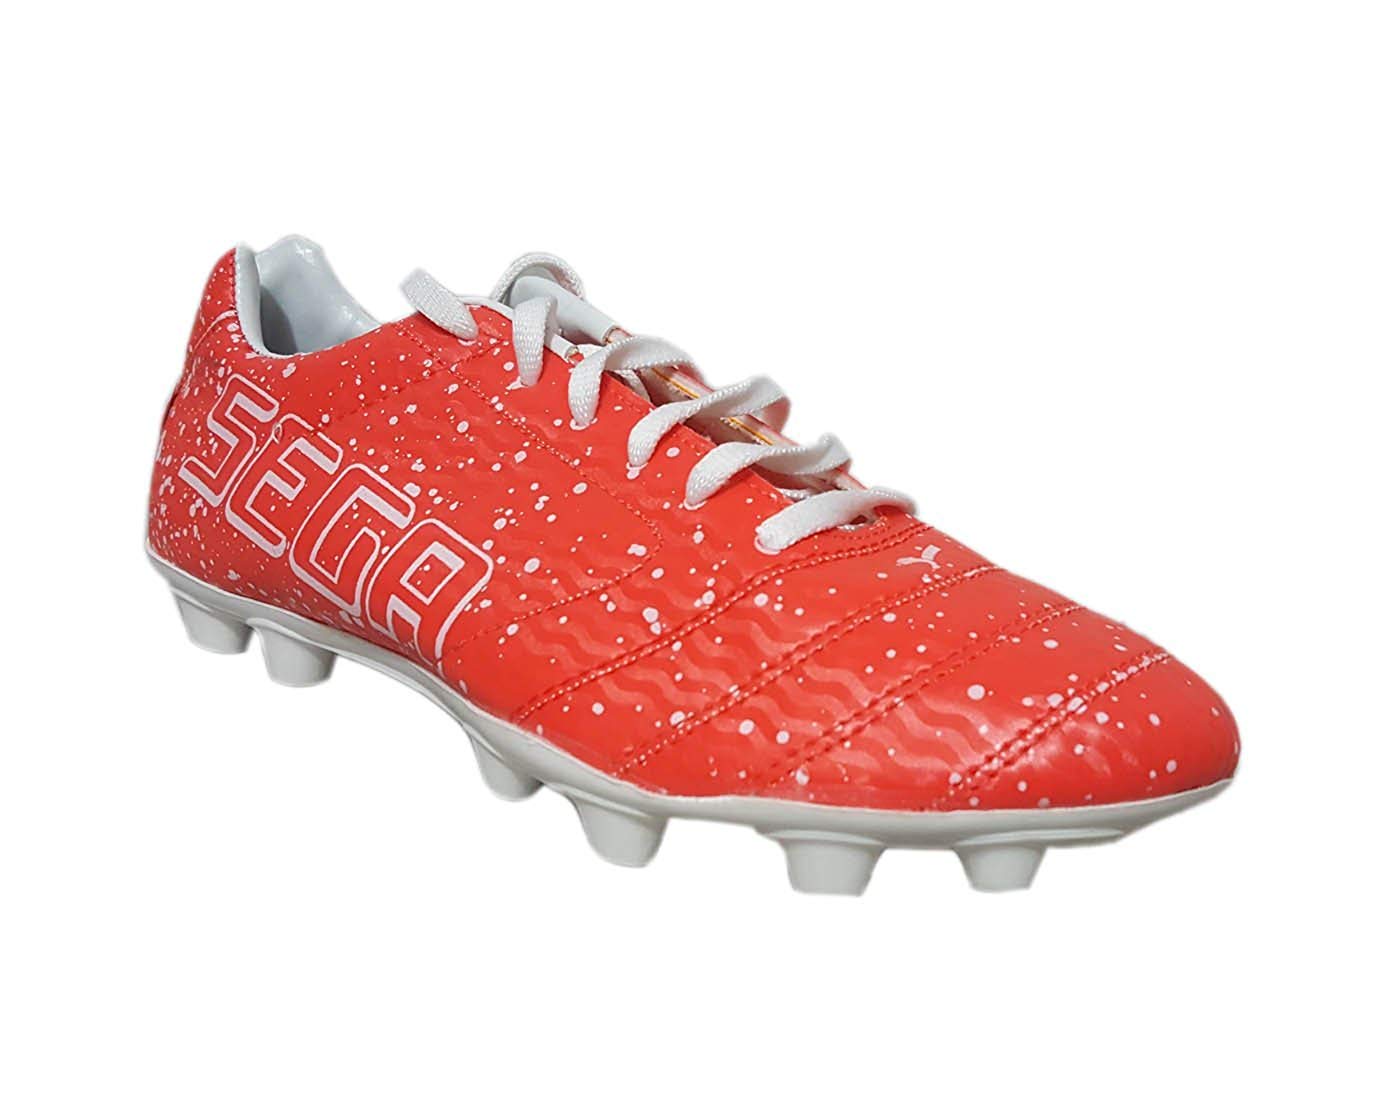 sega turf football shoes